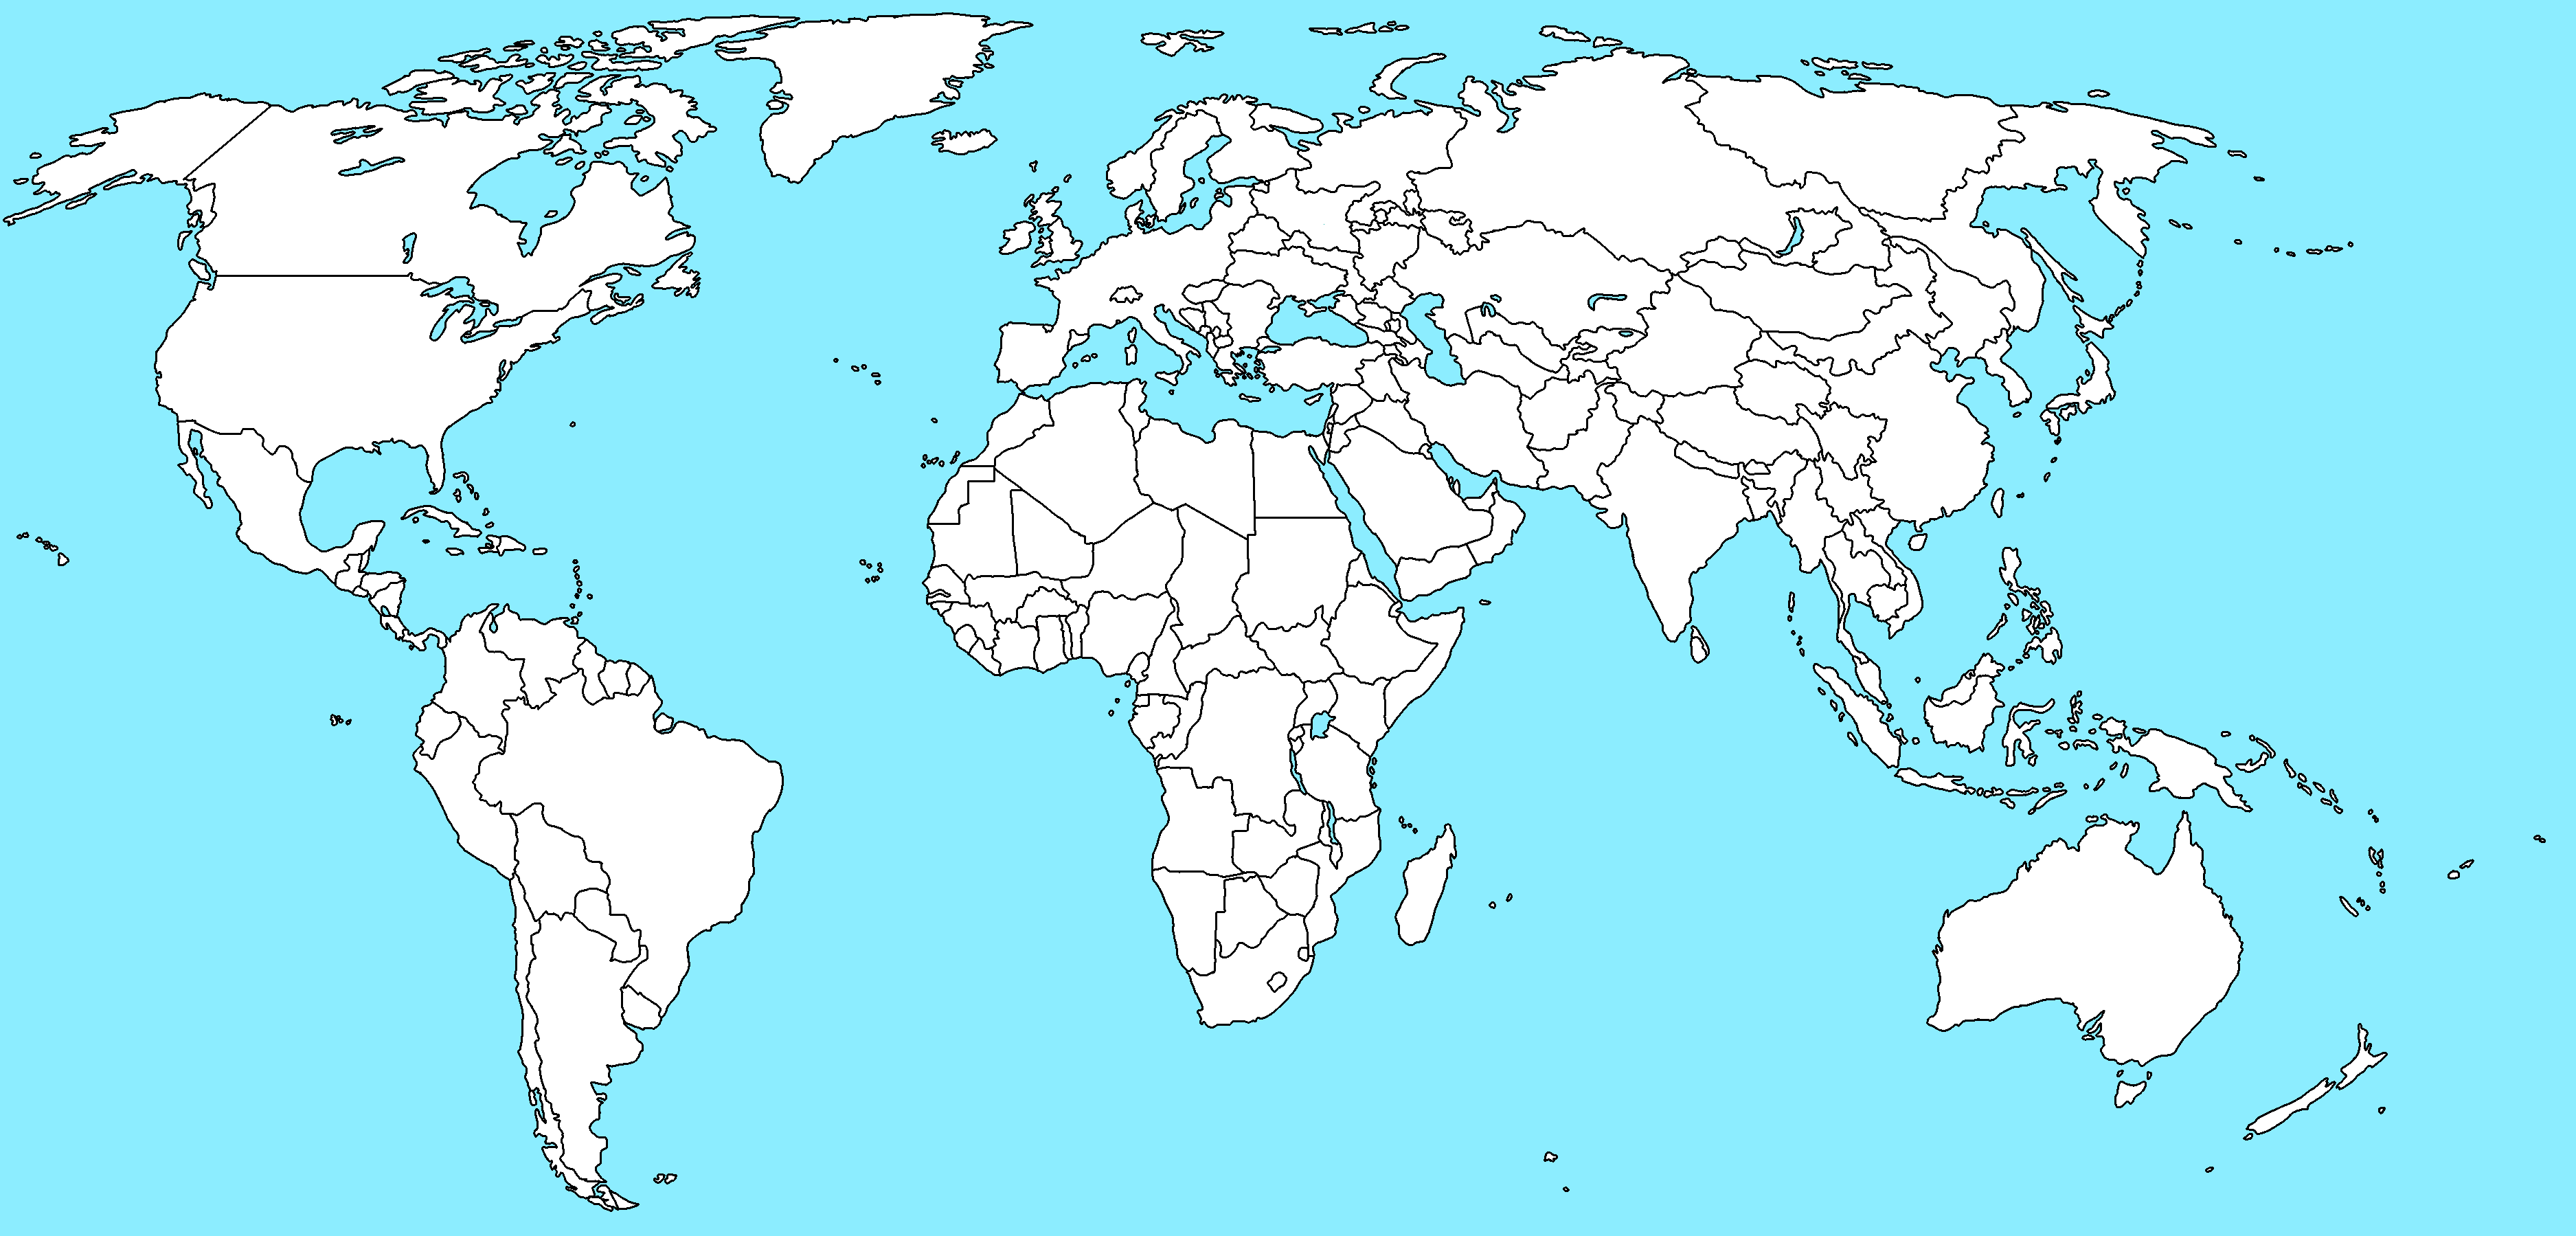 World in 2028. Blank map by MrBuster2005 on DeviantArt